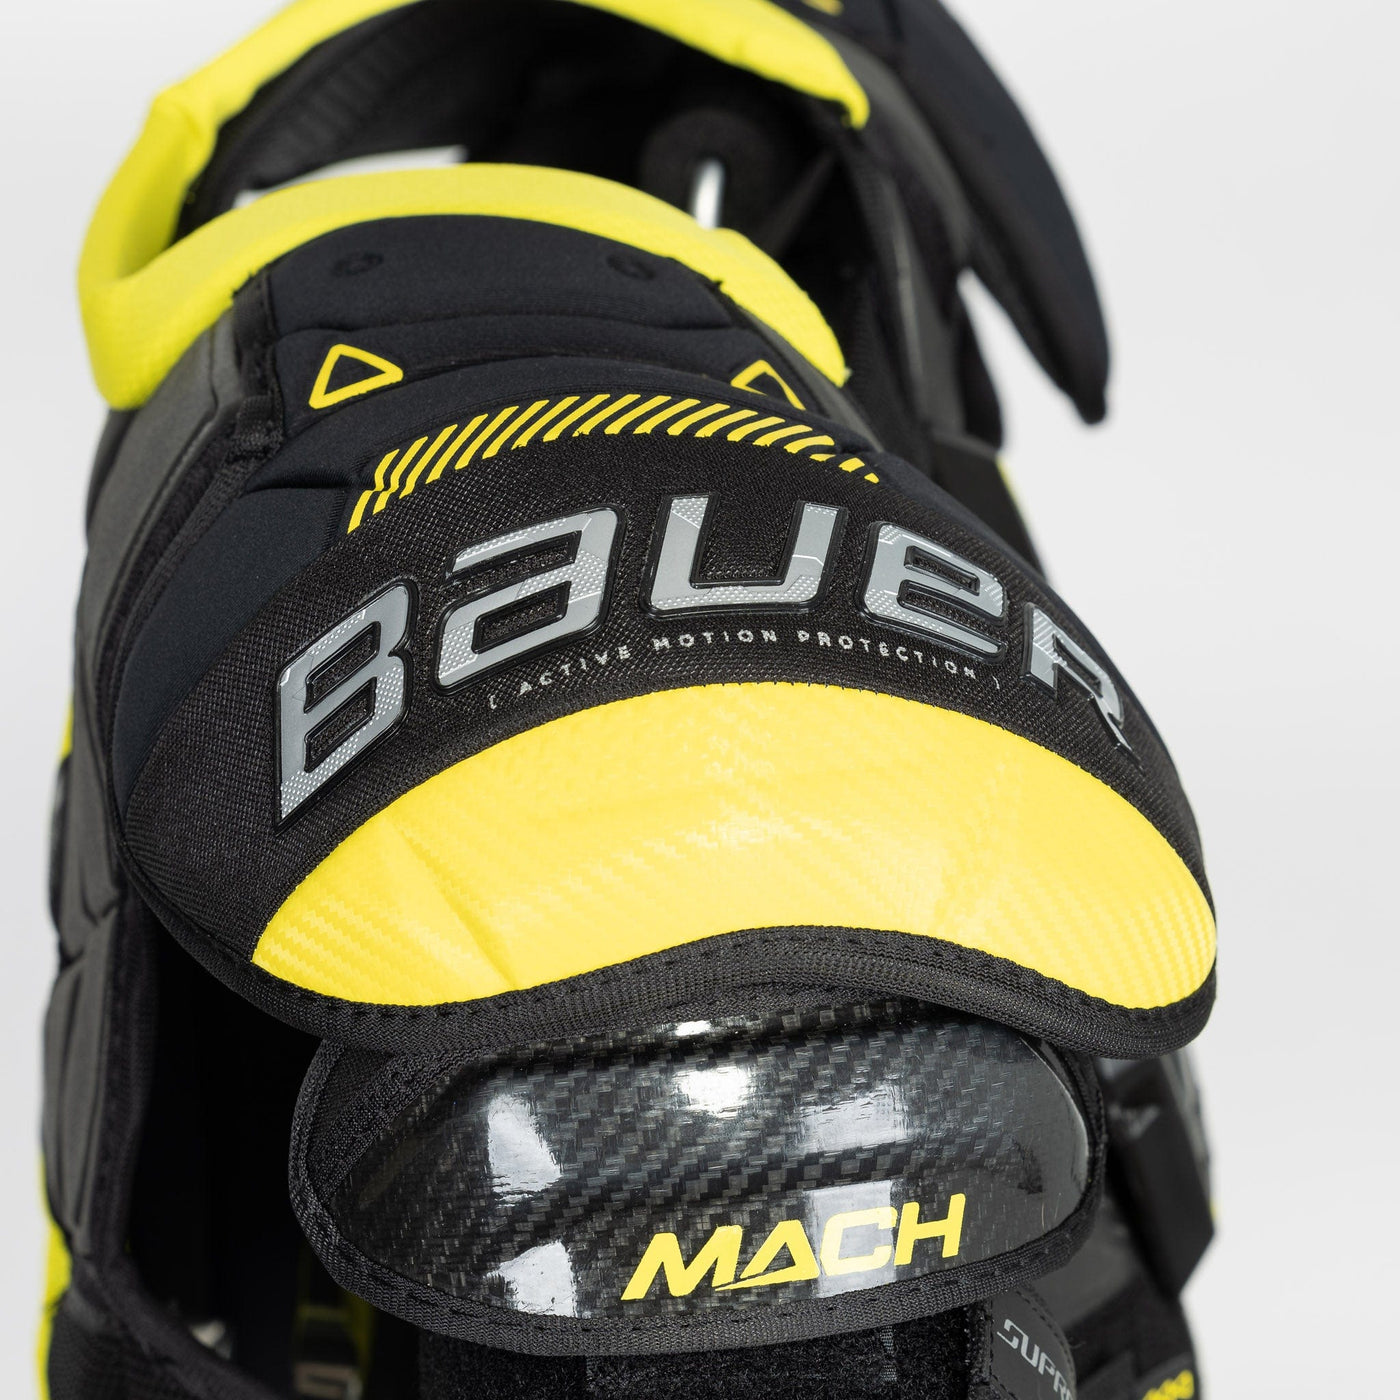 Bauer Supreme Mach Junior Hockey Shoulder Pads - The Hockey Shop Source For Sports